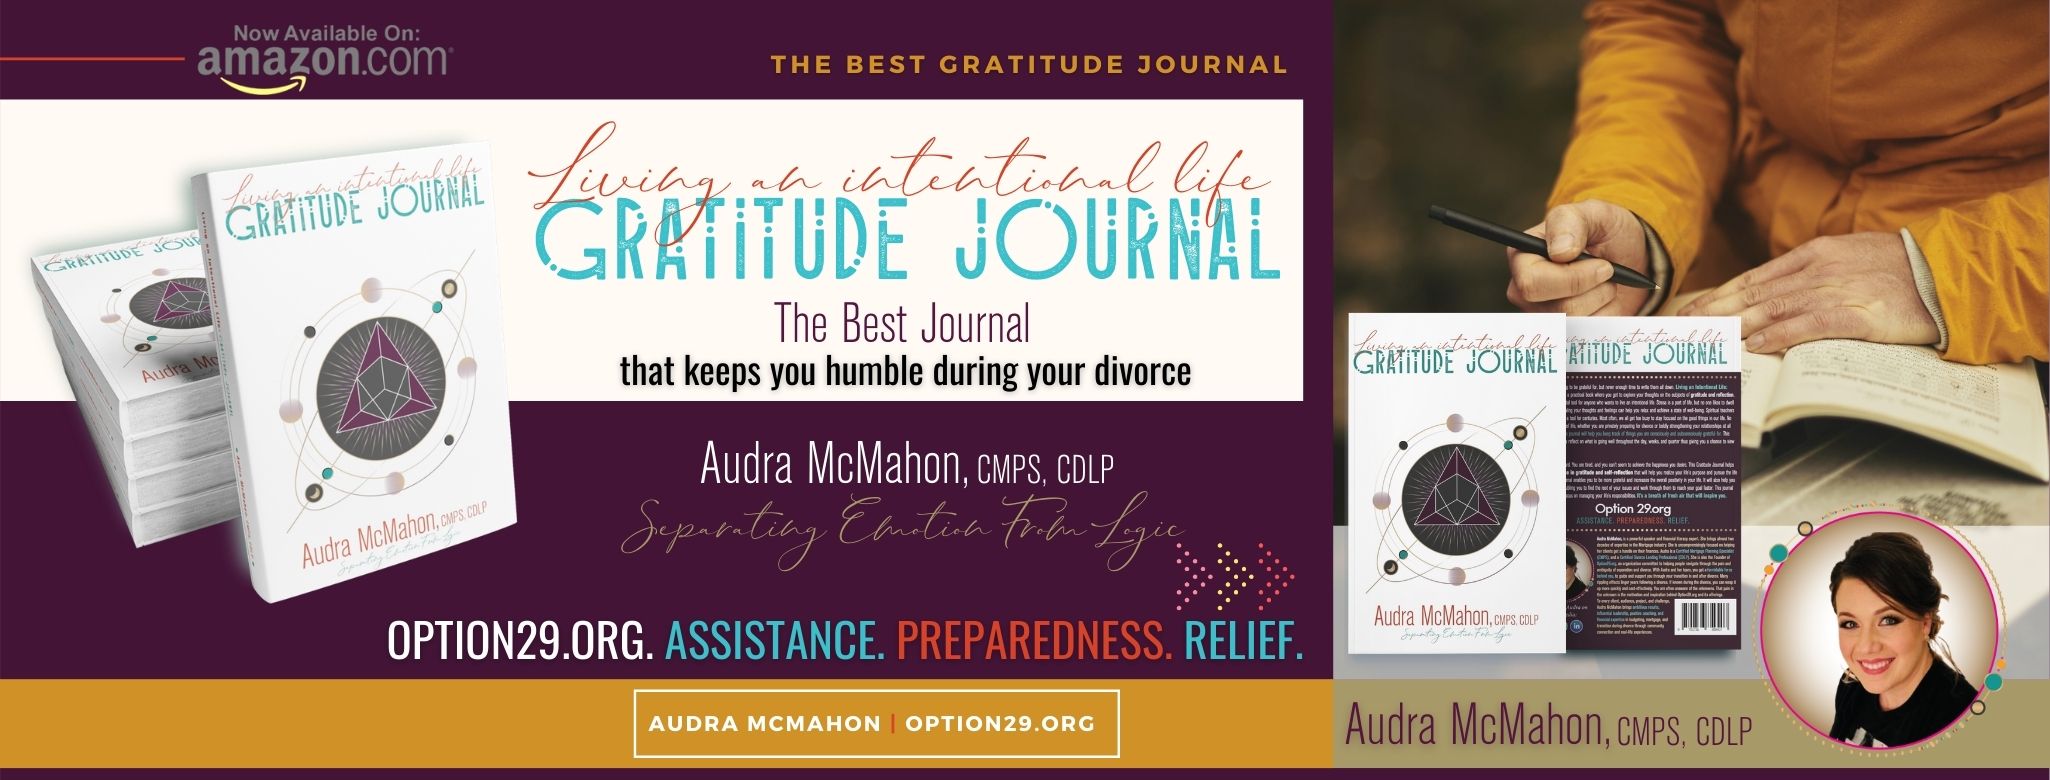 gratitude journal to get through divorce emotionally